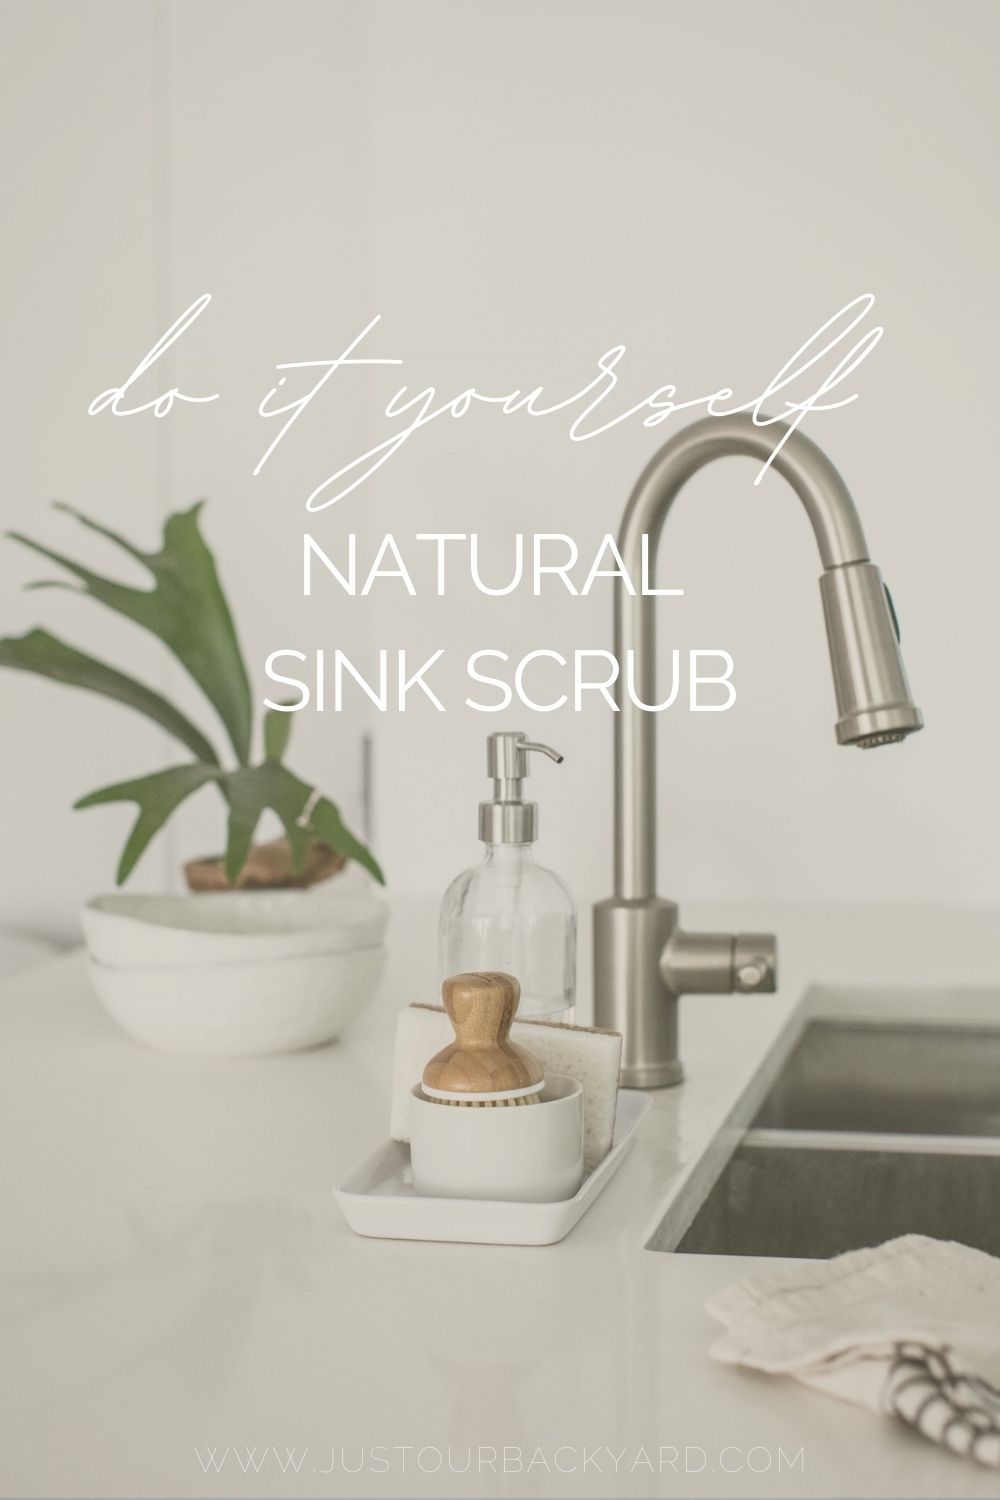 https://justourbackyard.com/wp-content/uploads/2021/03/DIY-bathroom-sink-cleaner-natural-soft-scrub-recipe.jpg